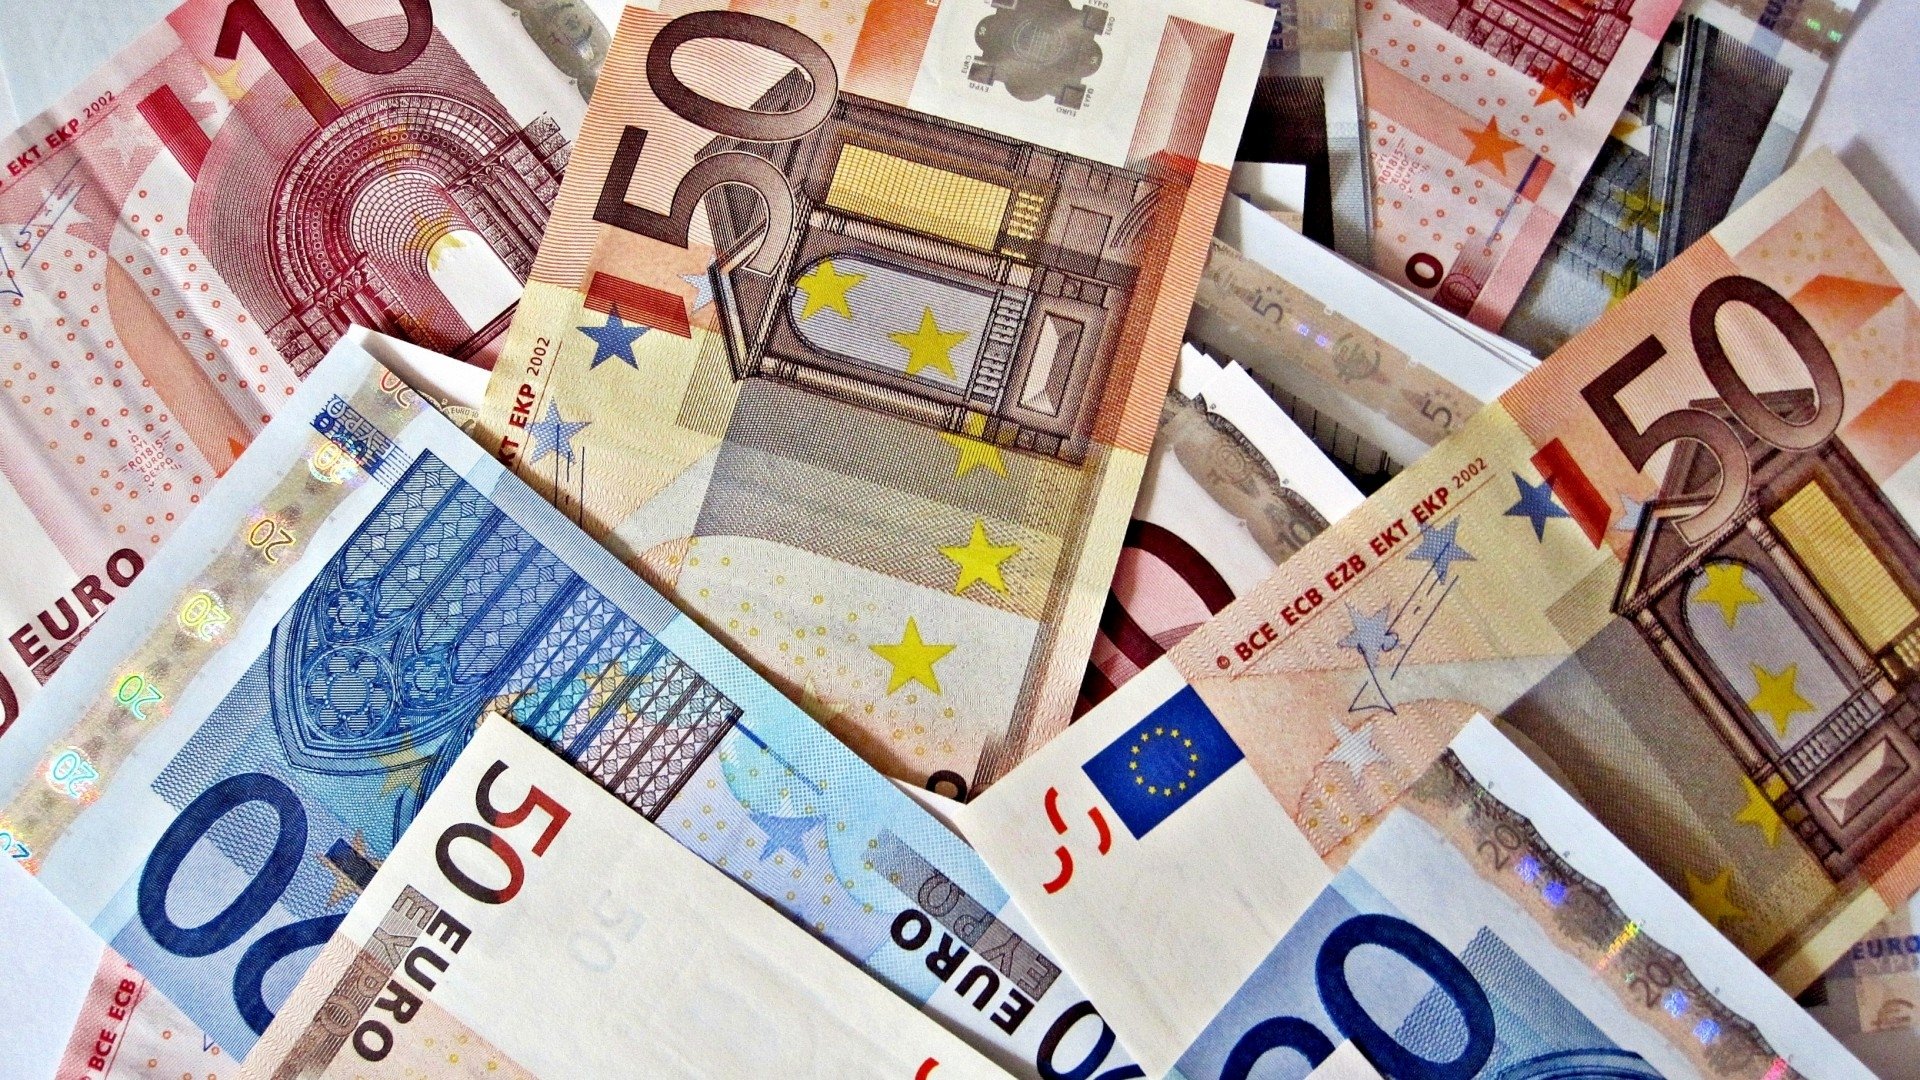 Curs valutar BNR 20 iulie 2020. Ce valoare a atins azi euro